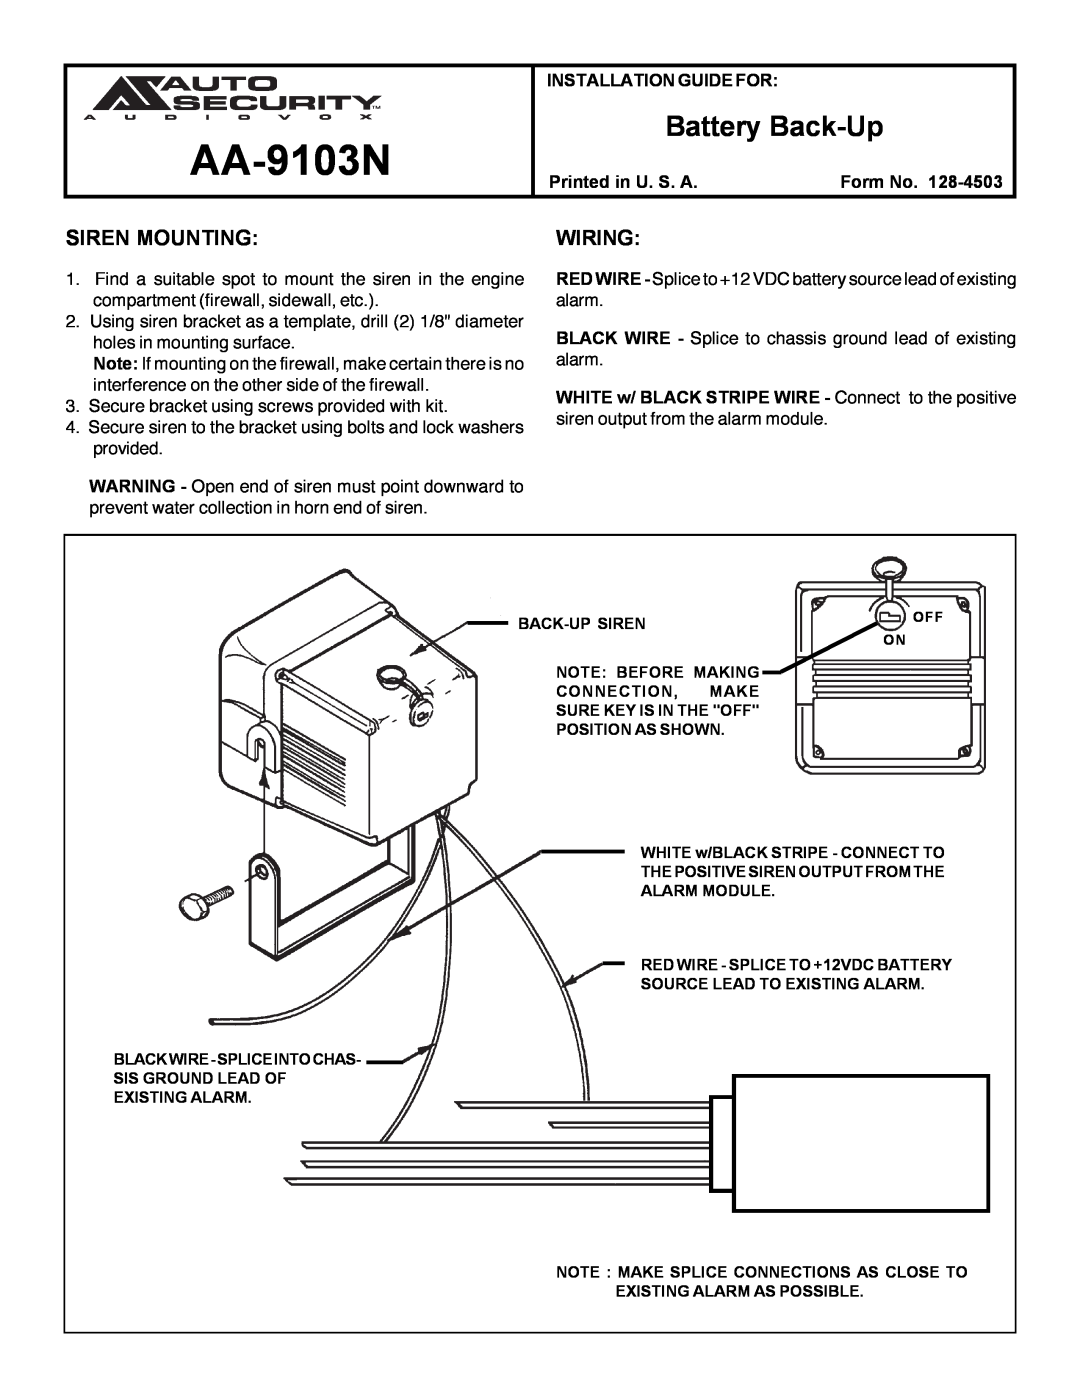 Audiovox AA9103N manual AA-9103N, Battery Back-Up, Siren Mounting, Wiring 